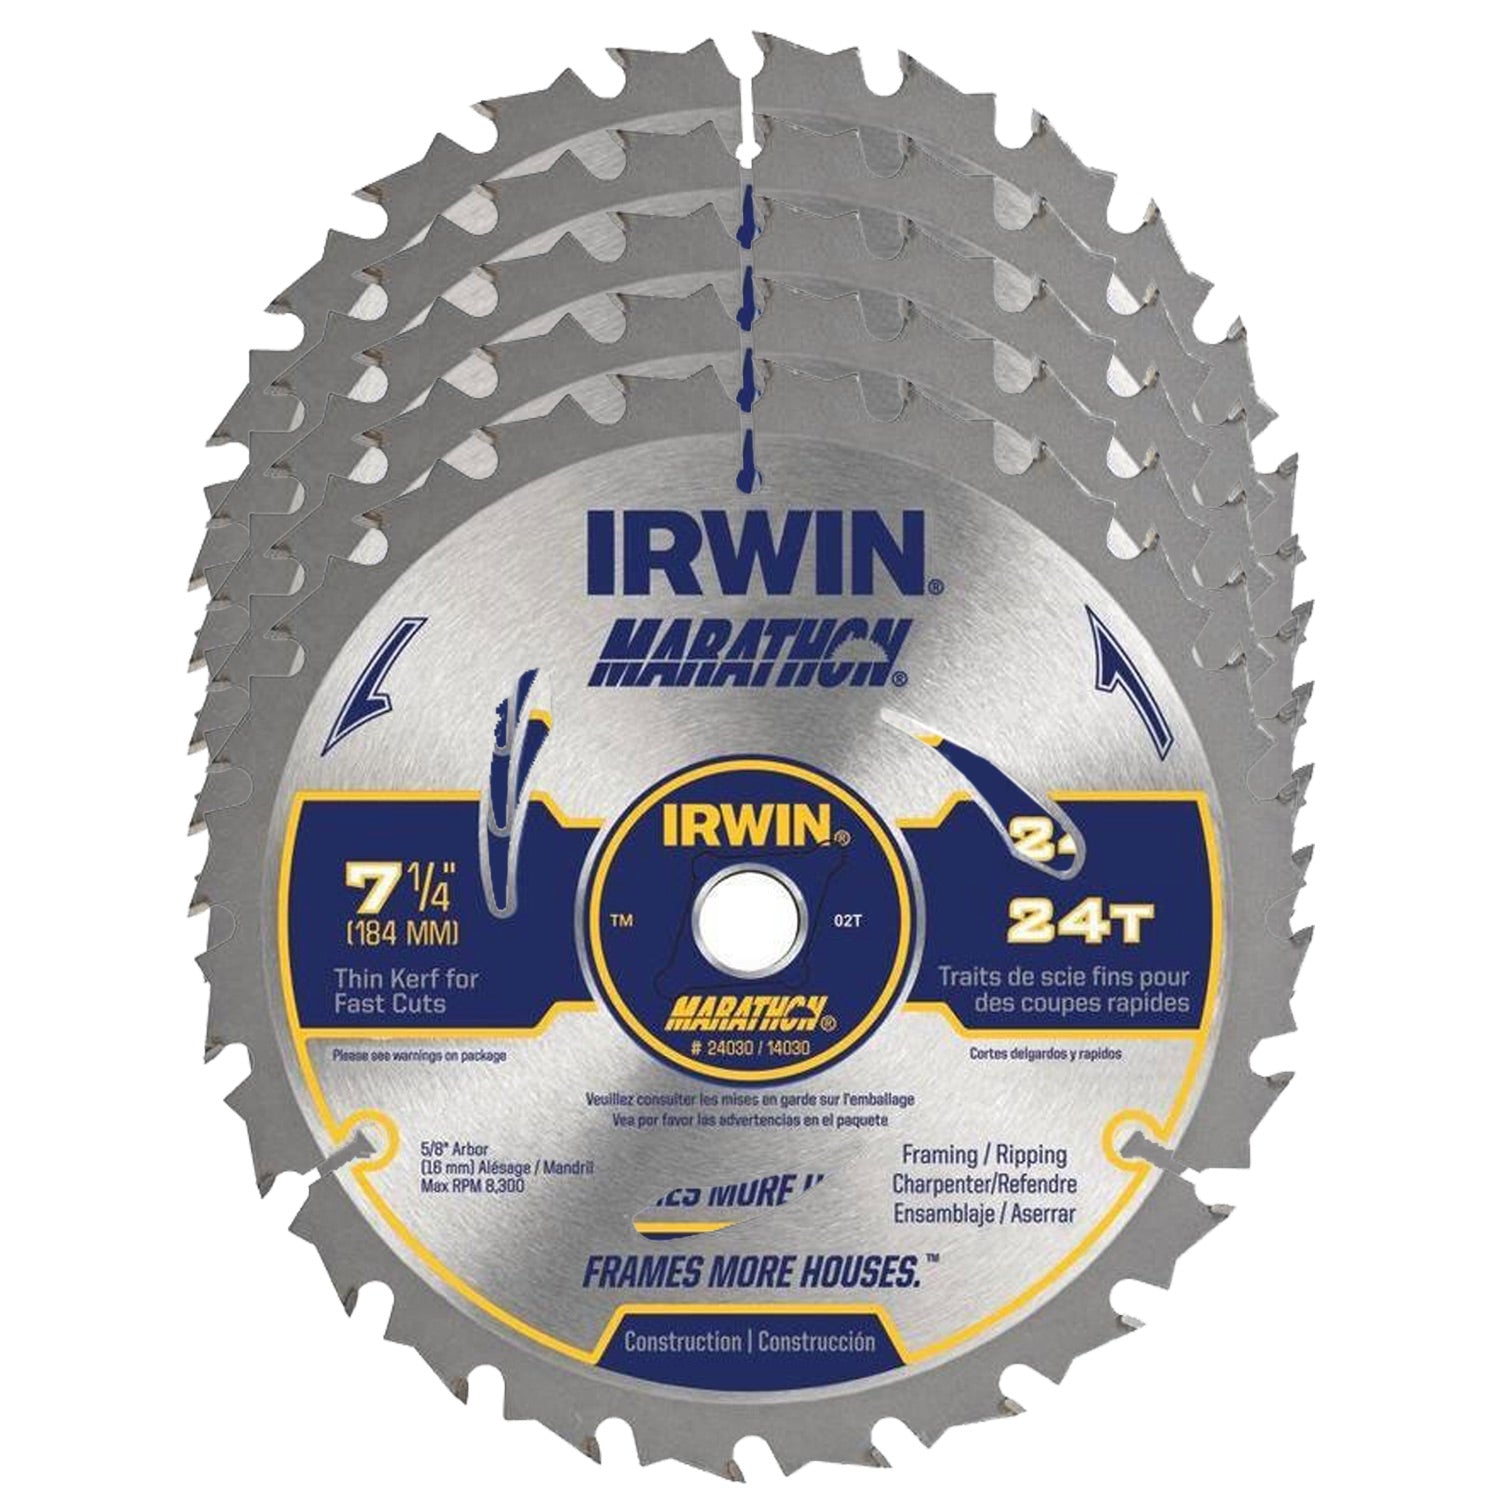 Irwin Marathon 24030-5PK 7-1/4" x 24 Tooth Circular Saw Blades (Pack of 5)